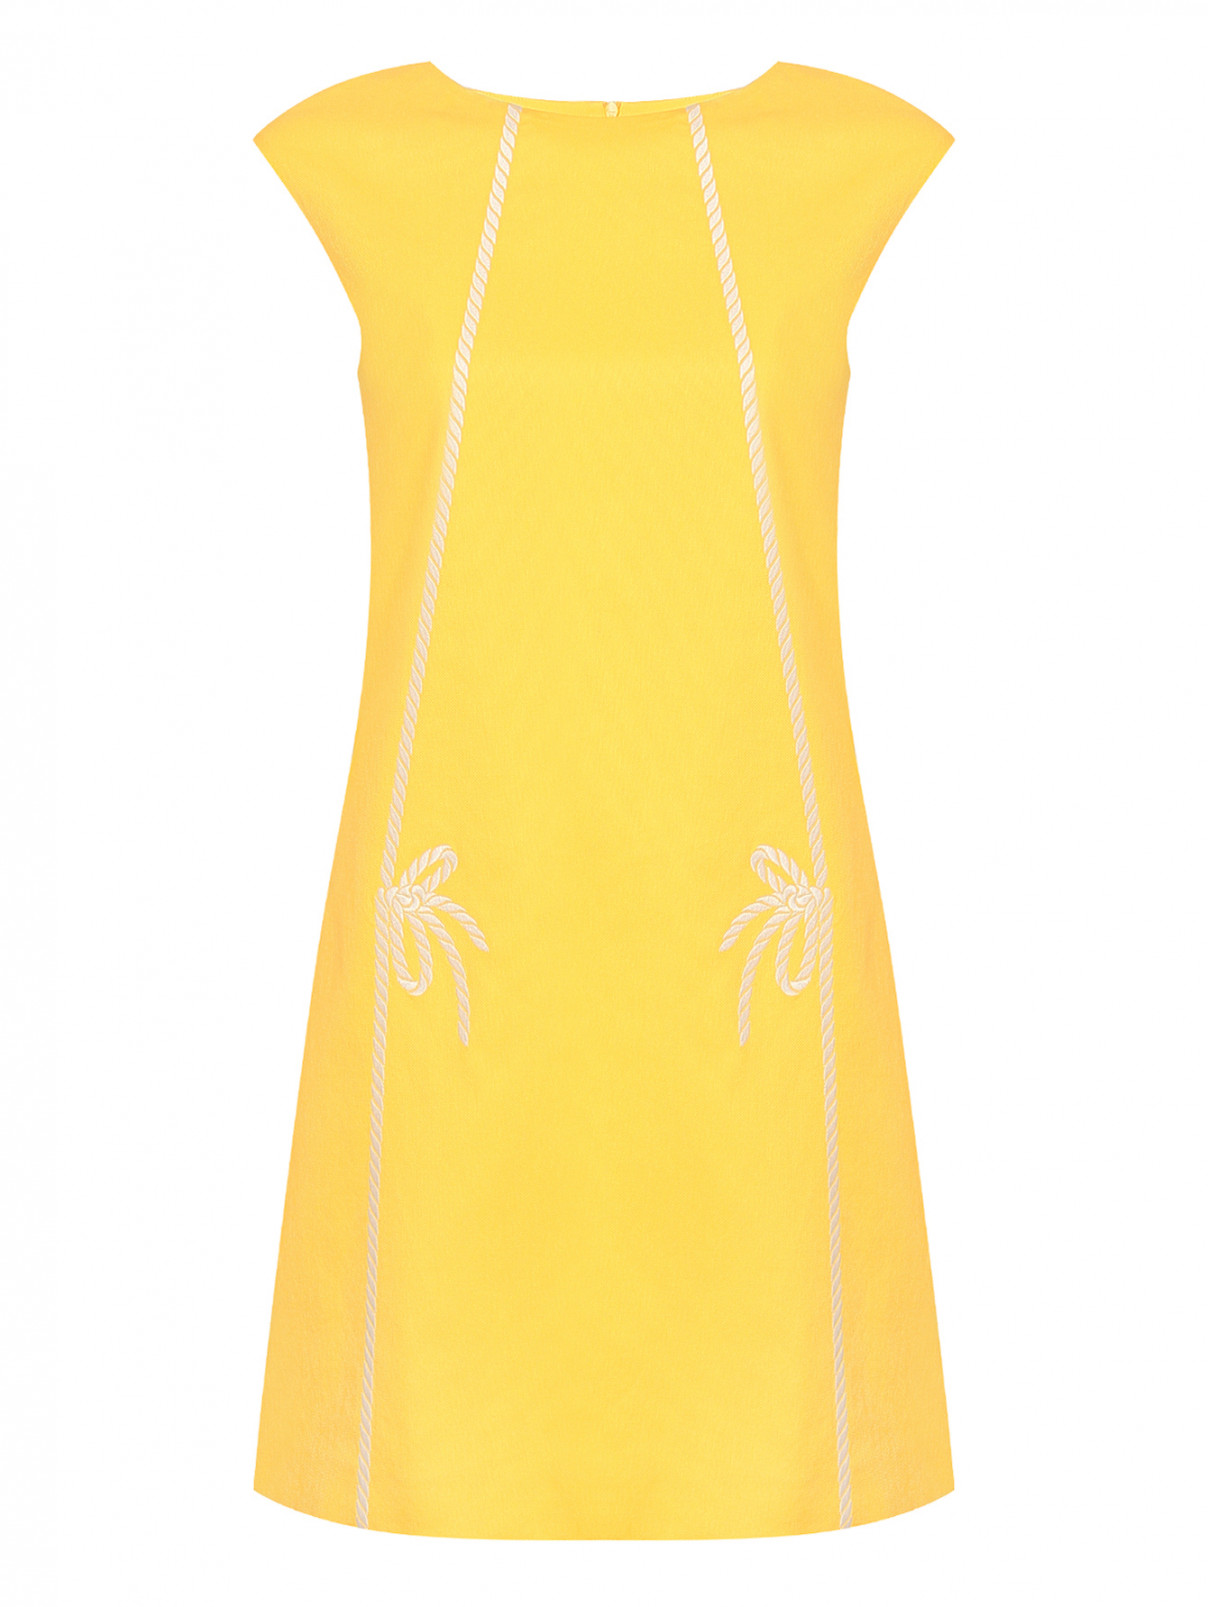 Платье из хлопка с узором Moschino Boutique  –  Общий вид  – Цвет:  Желтый